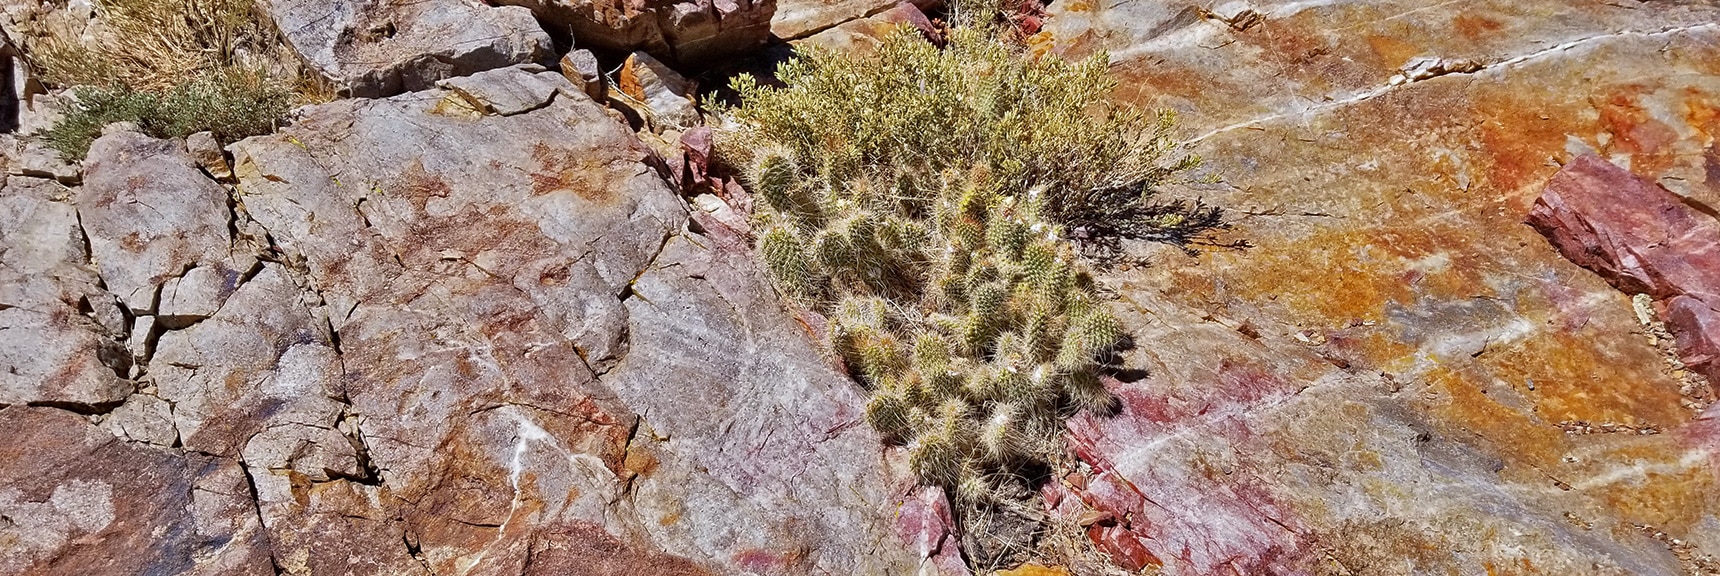 Cactus Rock Garden Near Beginning of Wildrose Peak Trail | Wildrose Peak | Panamint Mountain Range | Death Valley National Park, California